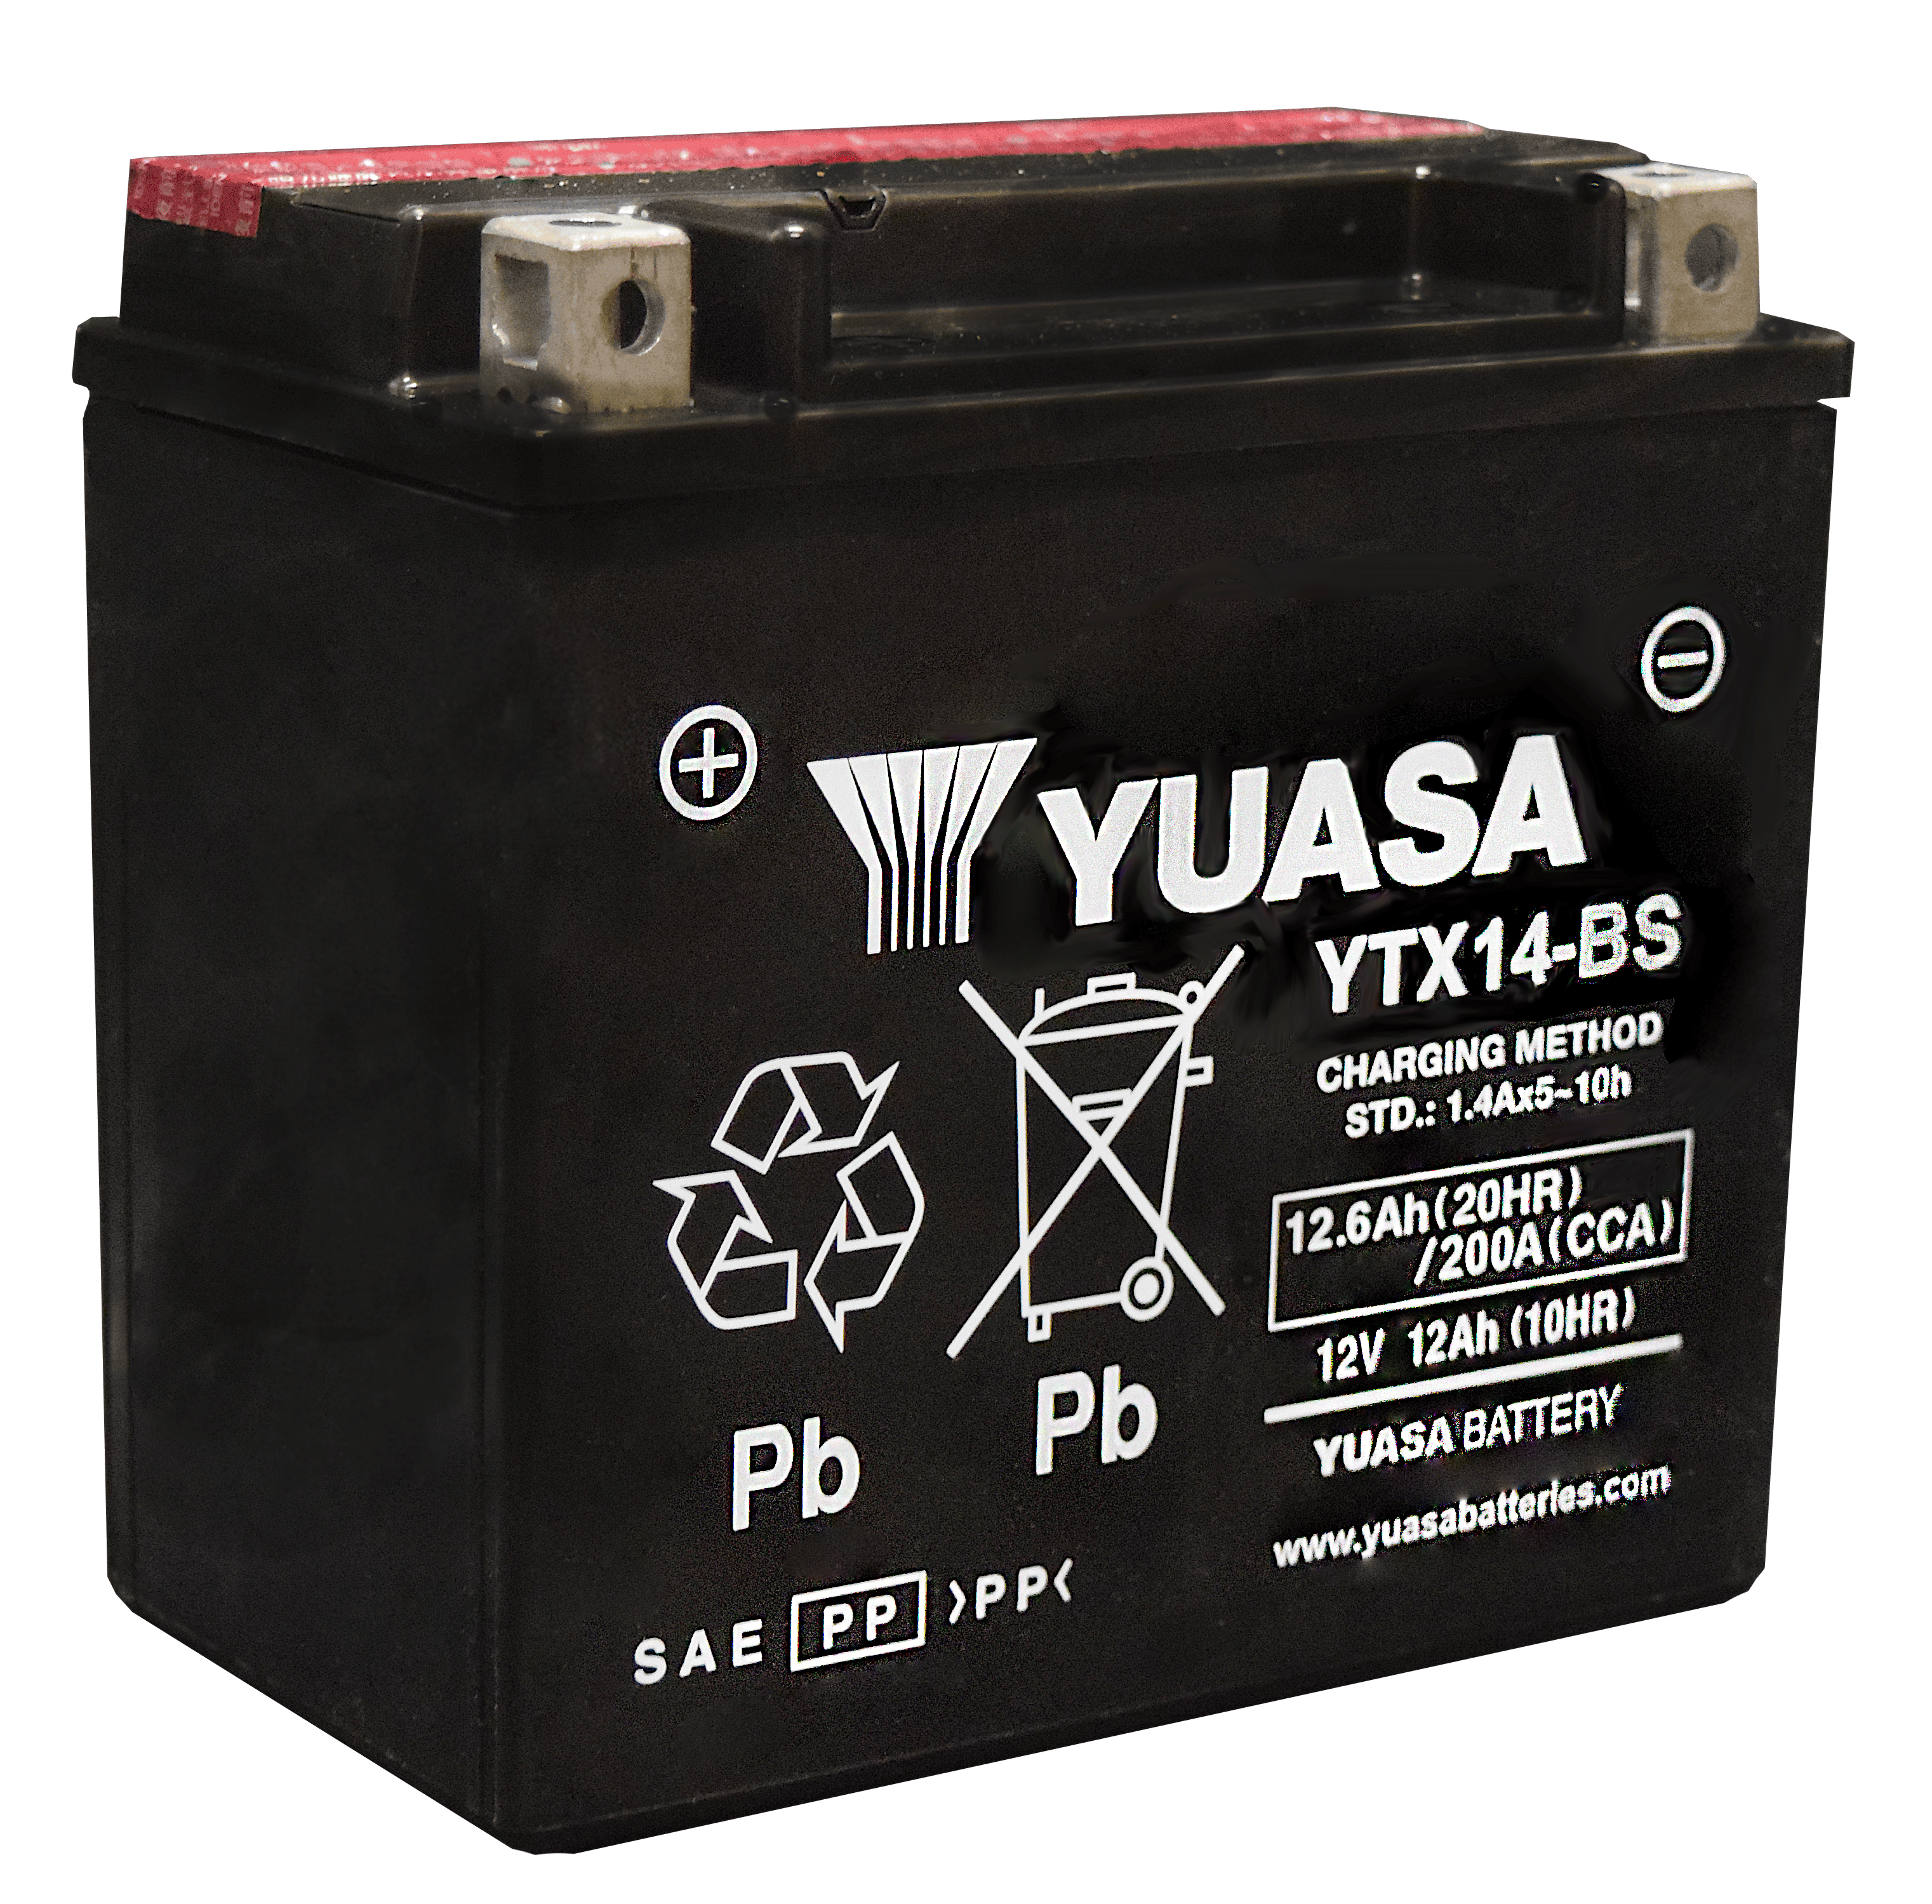 3 x YUASA 12V 12AH BATTERY FOR ELECTRIC BIKE ELECTRIC SCOOTER & TOY CAR 